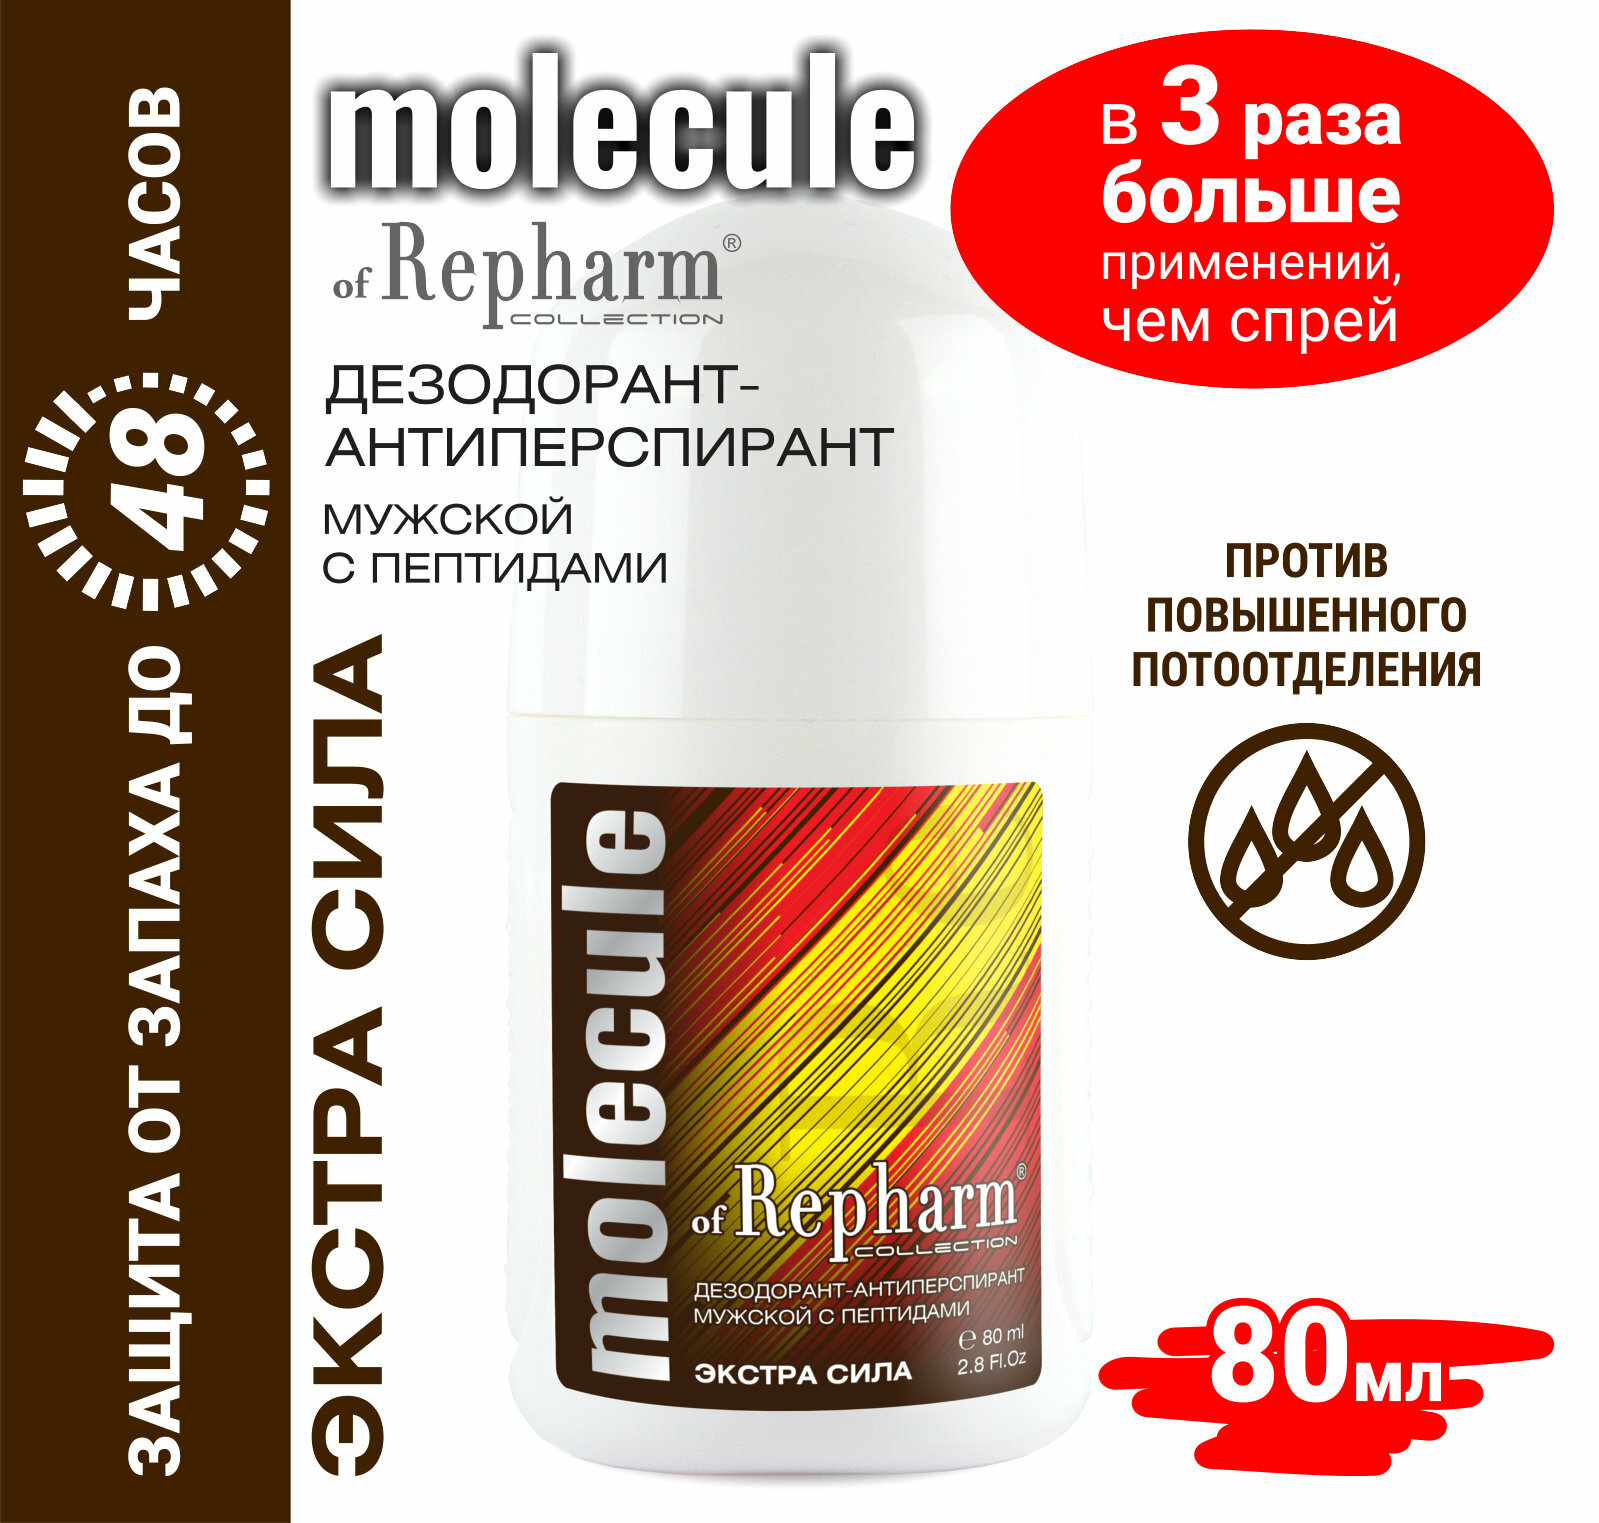 Molecule of Repharm® COLLECTION дезодорант - антиперспирант экстра сила мужской с пептидами